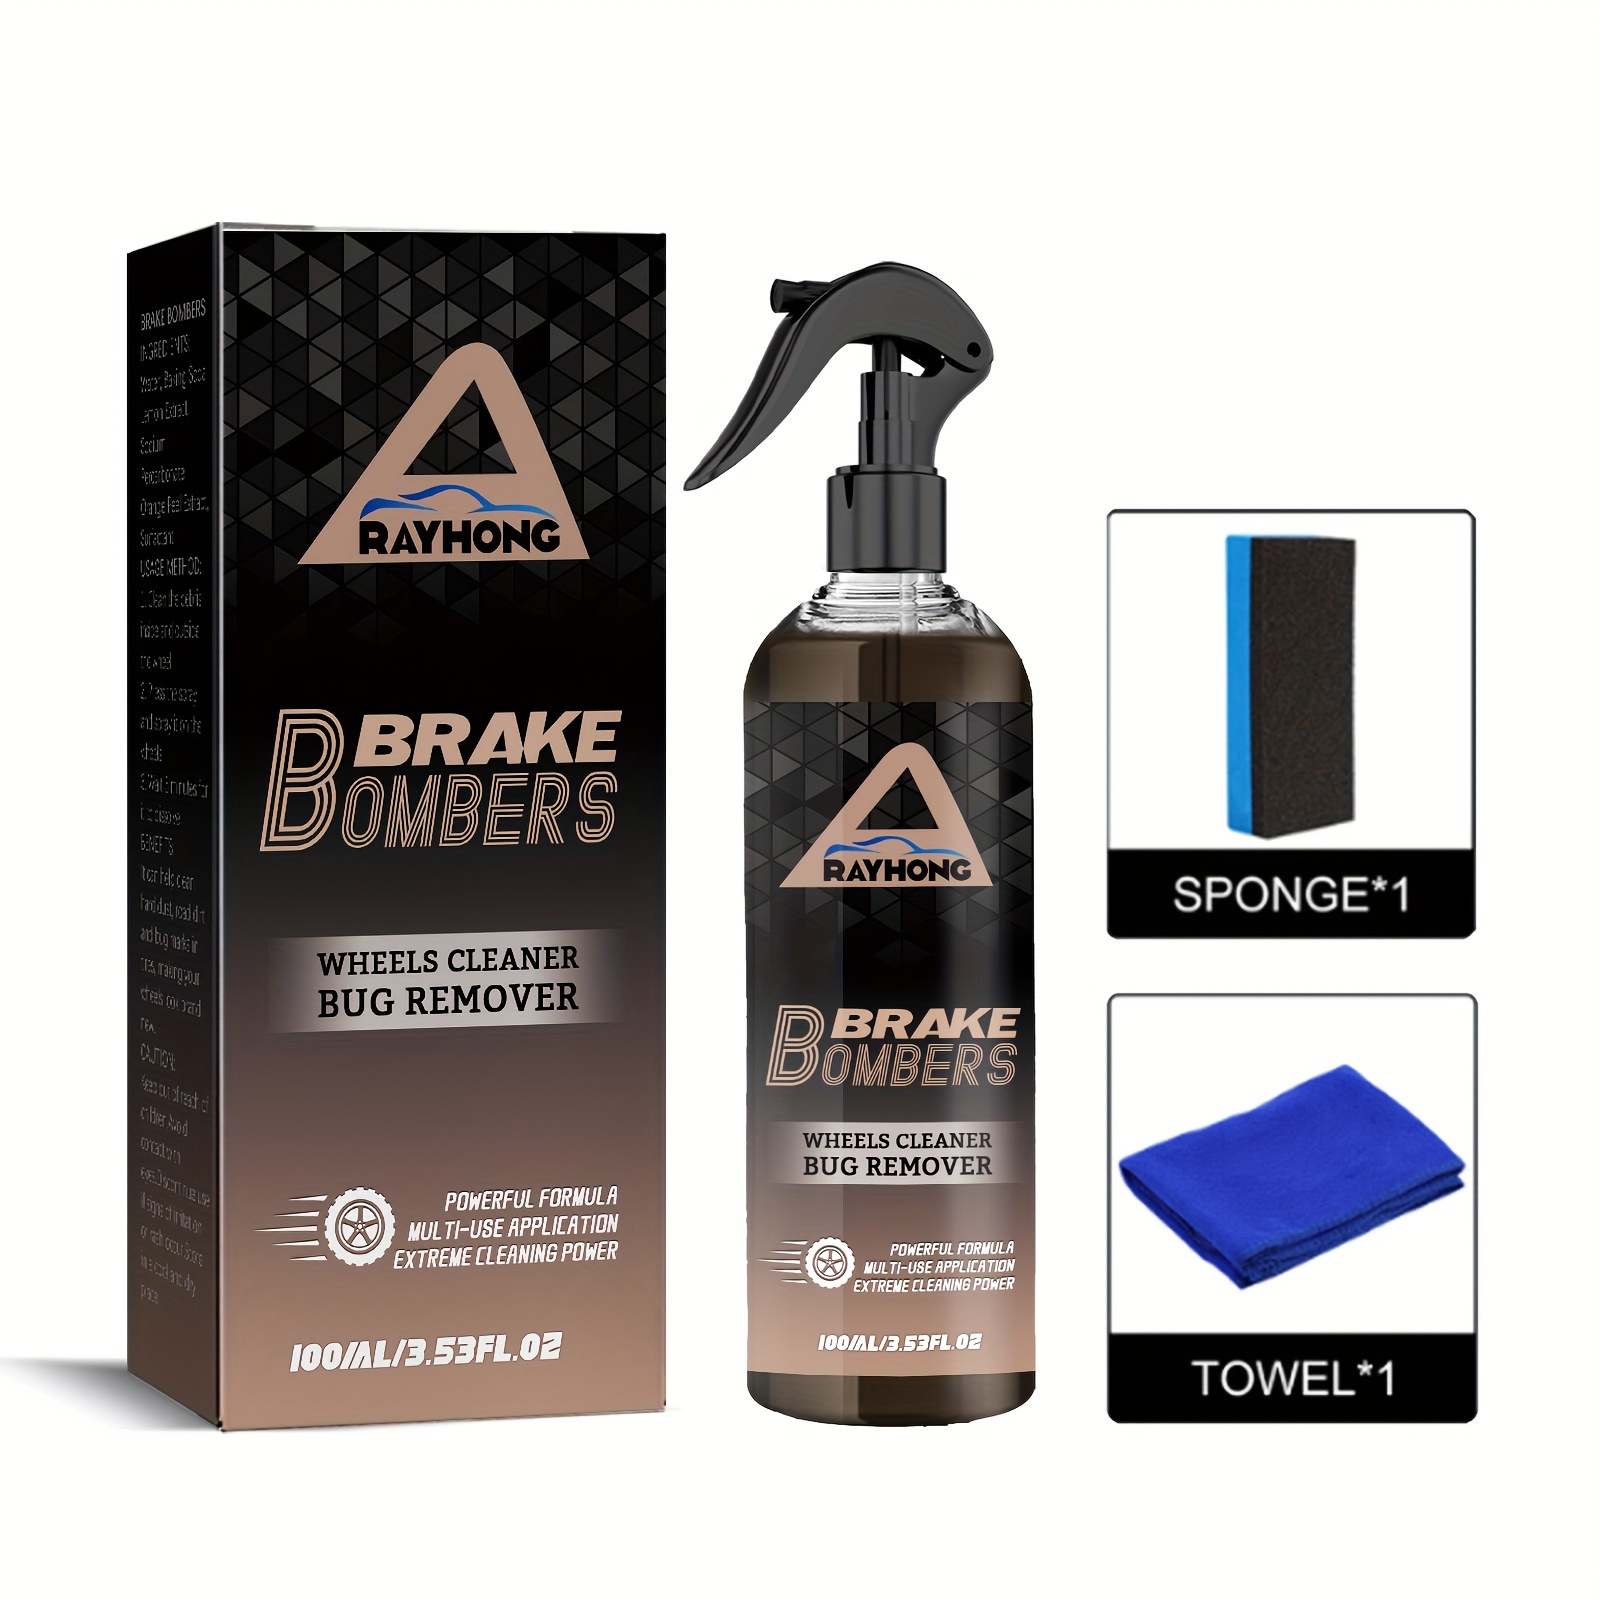  ZCOONE Brake Bomber Wheel Cleaner, Powerful Non-Acid